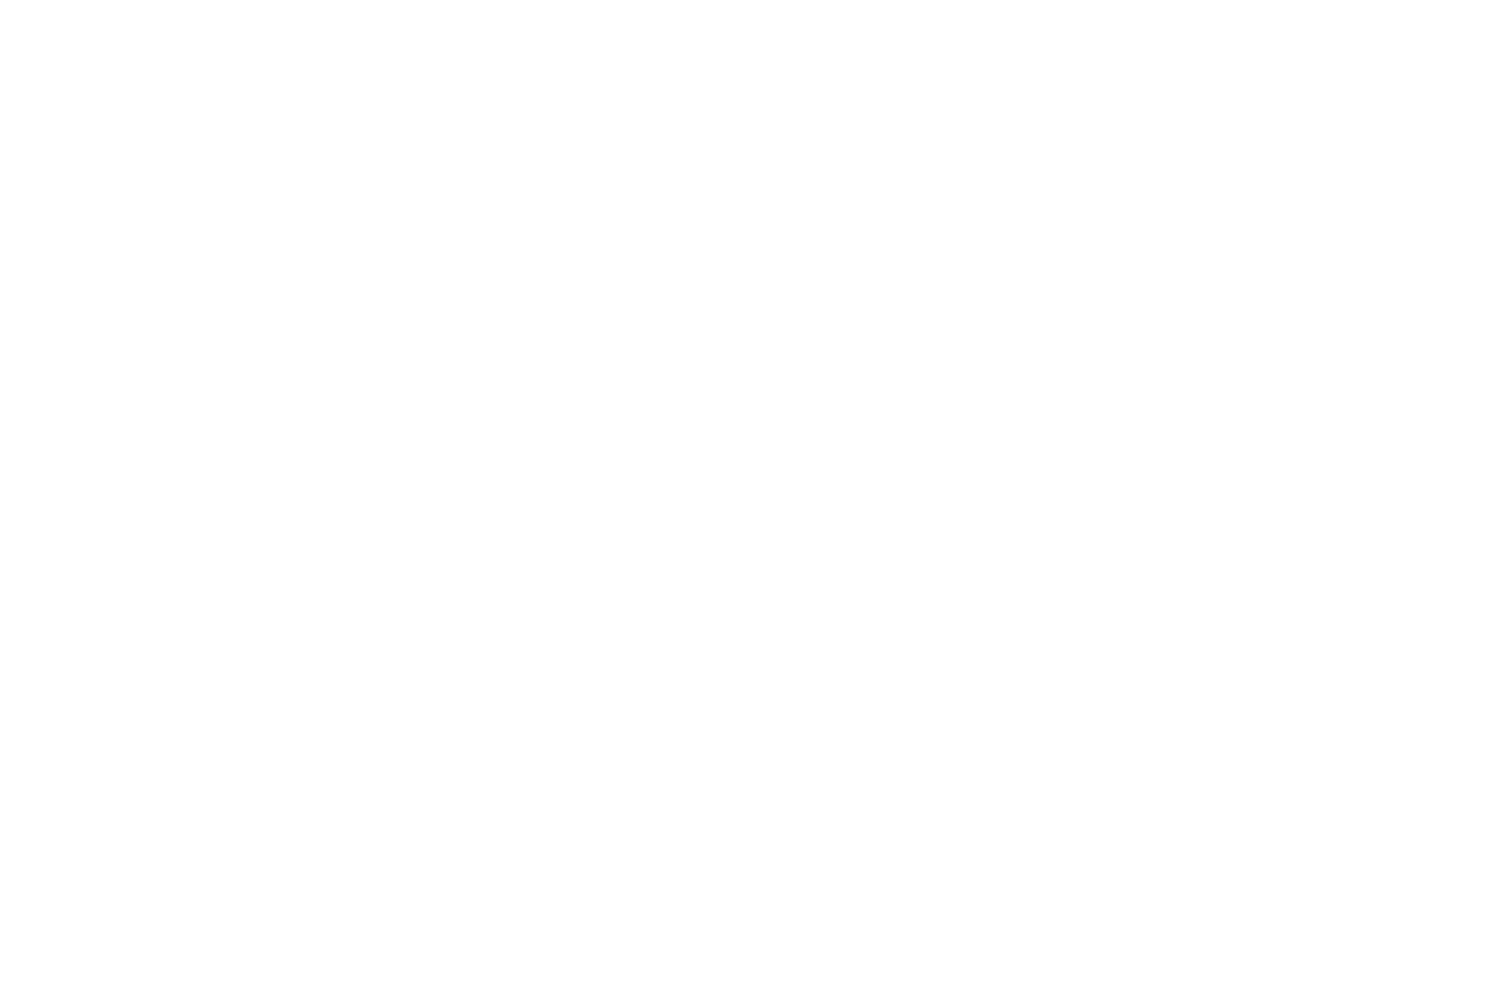 Waiehu Community Church